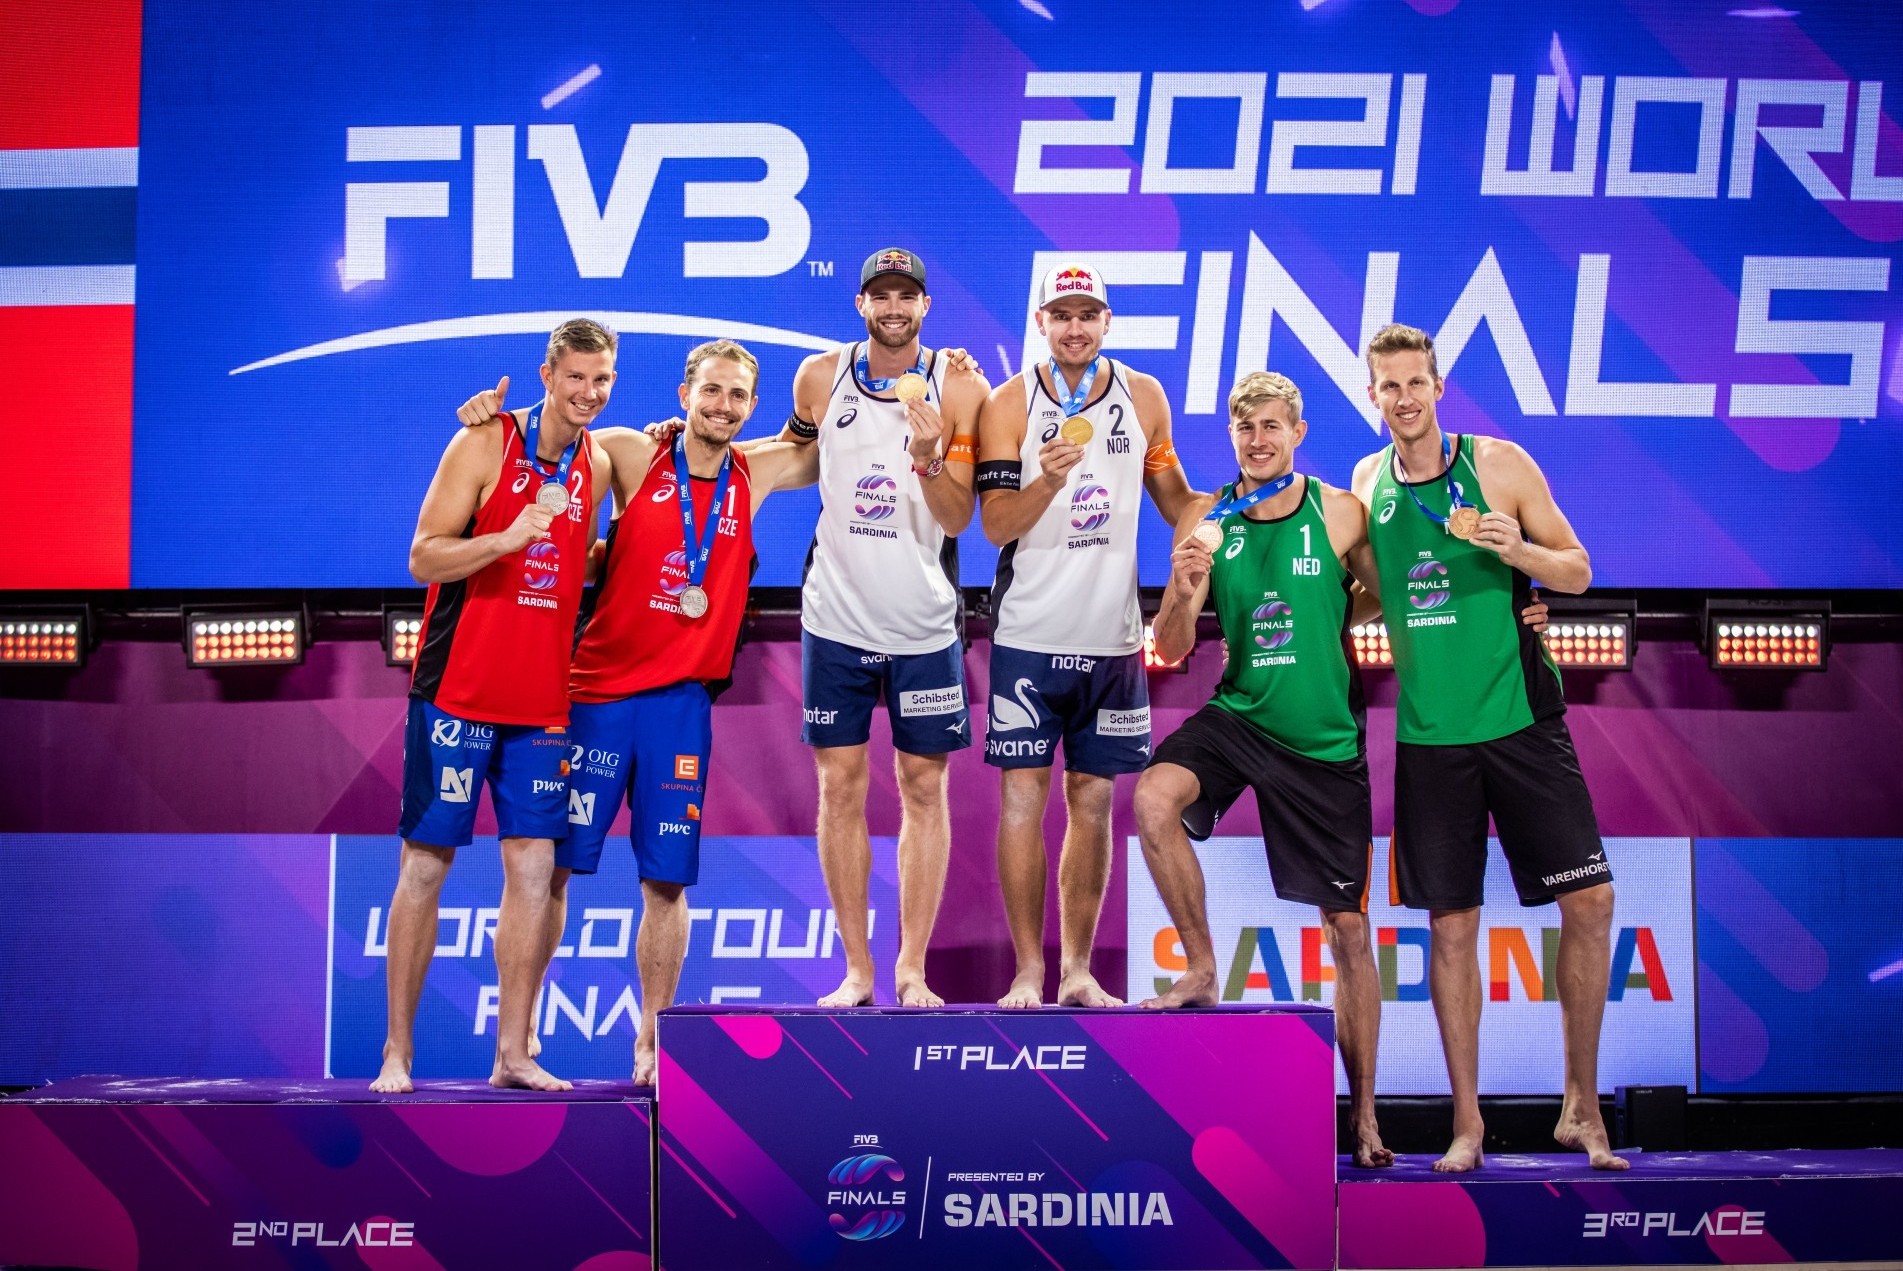 The men’s podium at the World Tour Finals in Sardinia